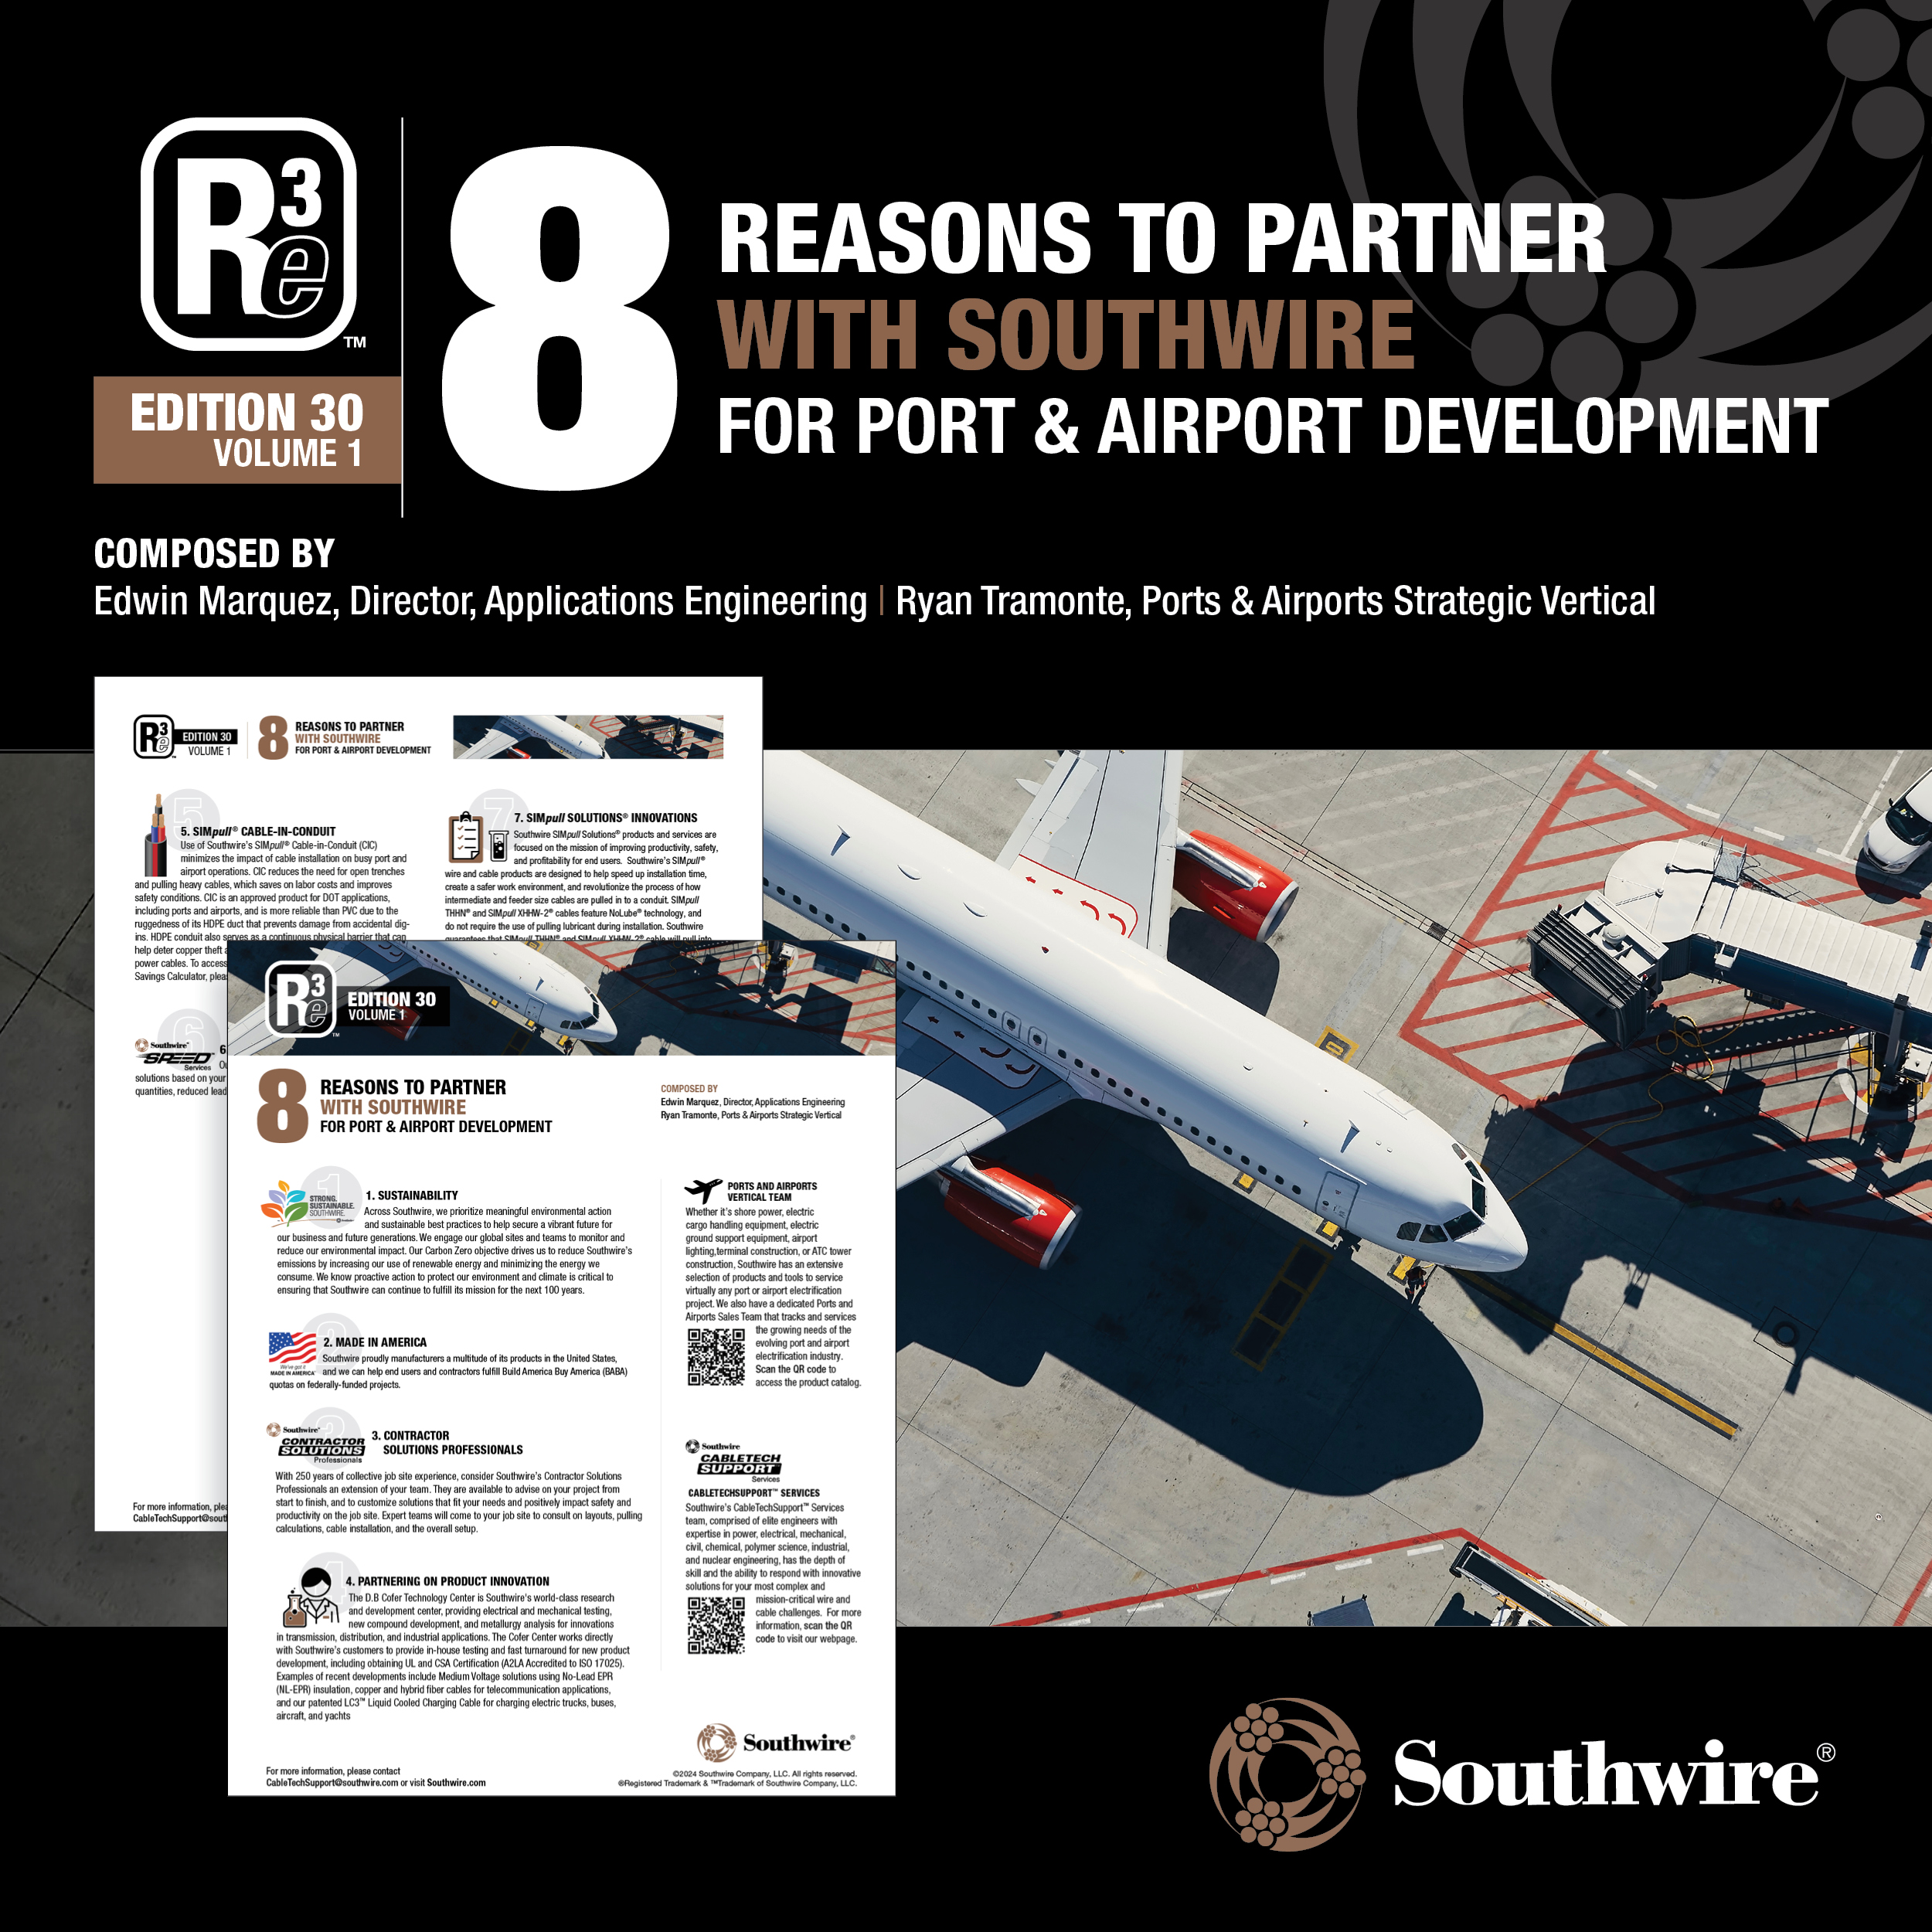 2405_Re3_Ed30_8_Reasons_Partner_Southwire_Port_Airport_Development.jpg